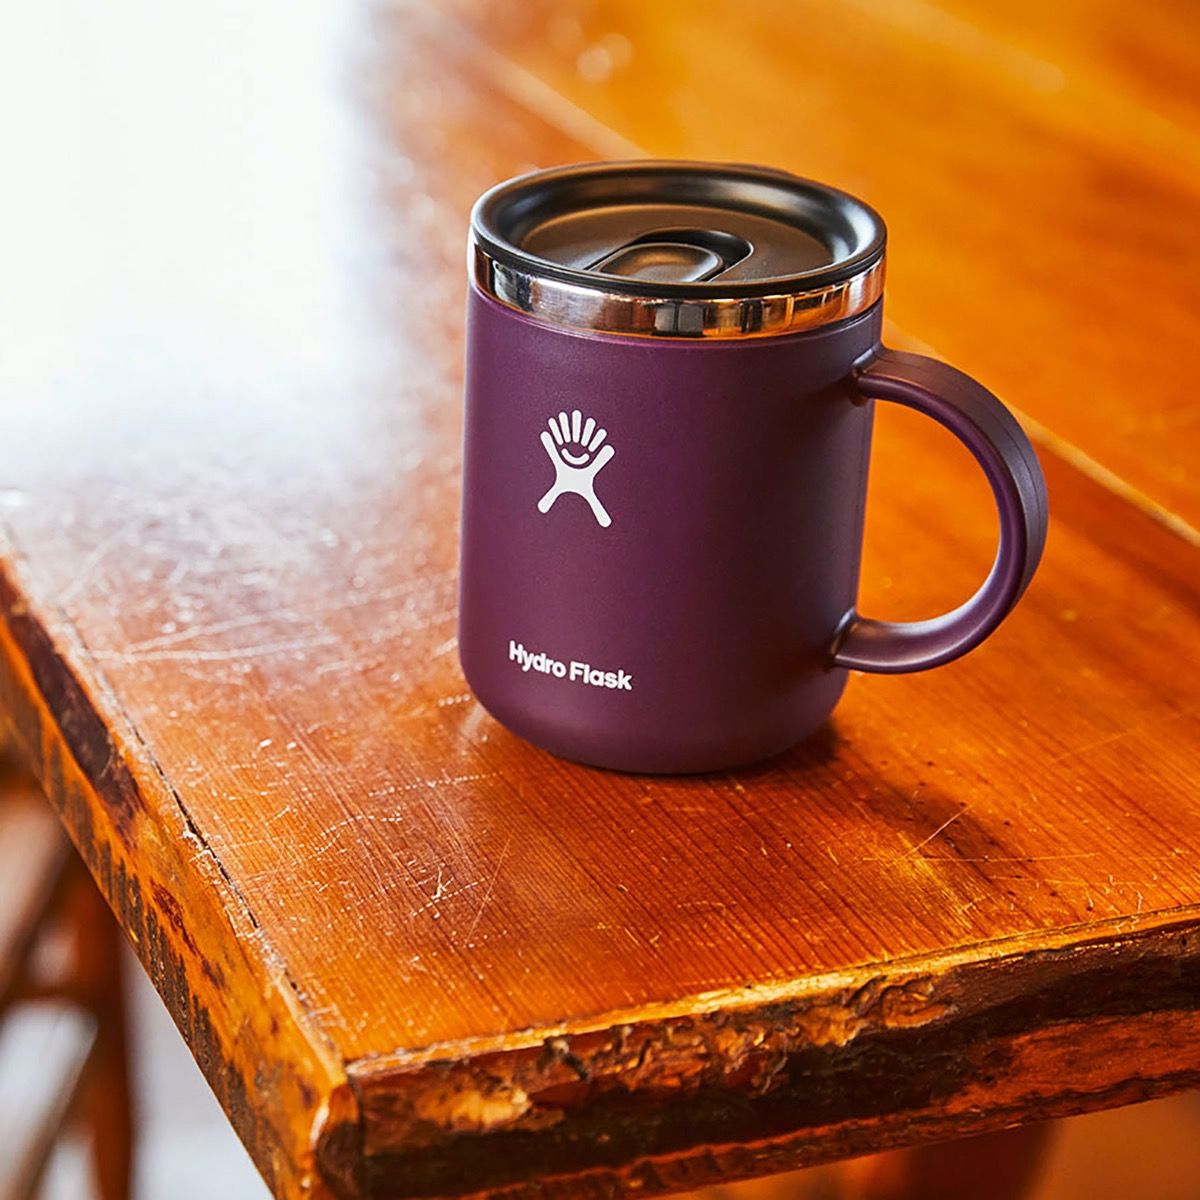 12 oz Coffee Mug - Goji – Gazelle Sports